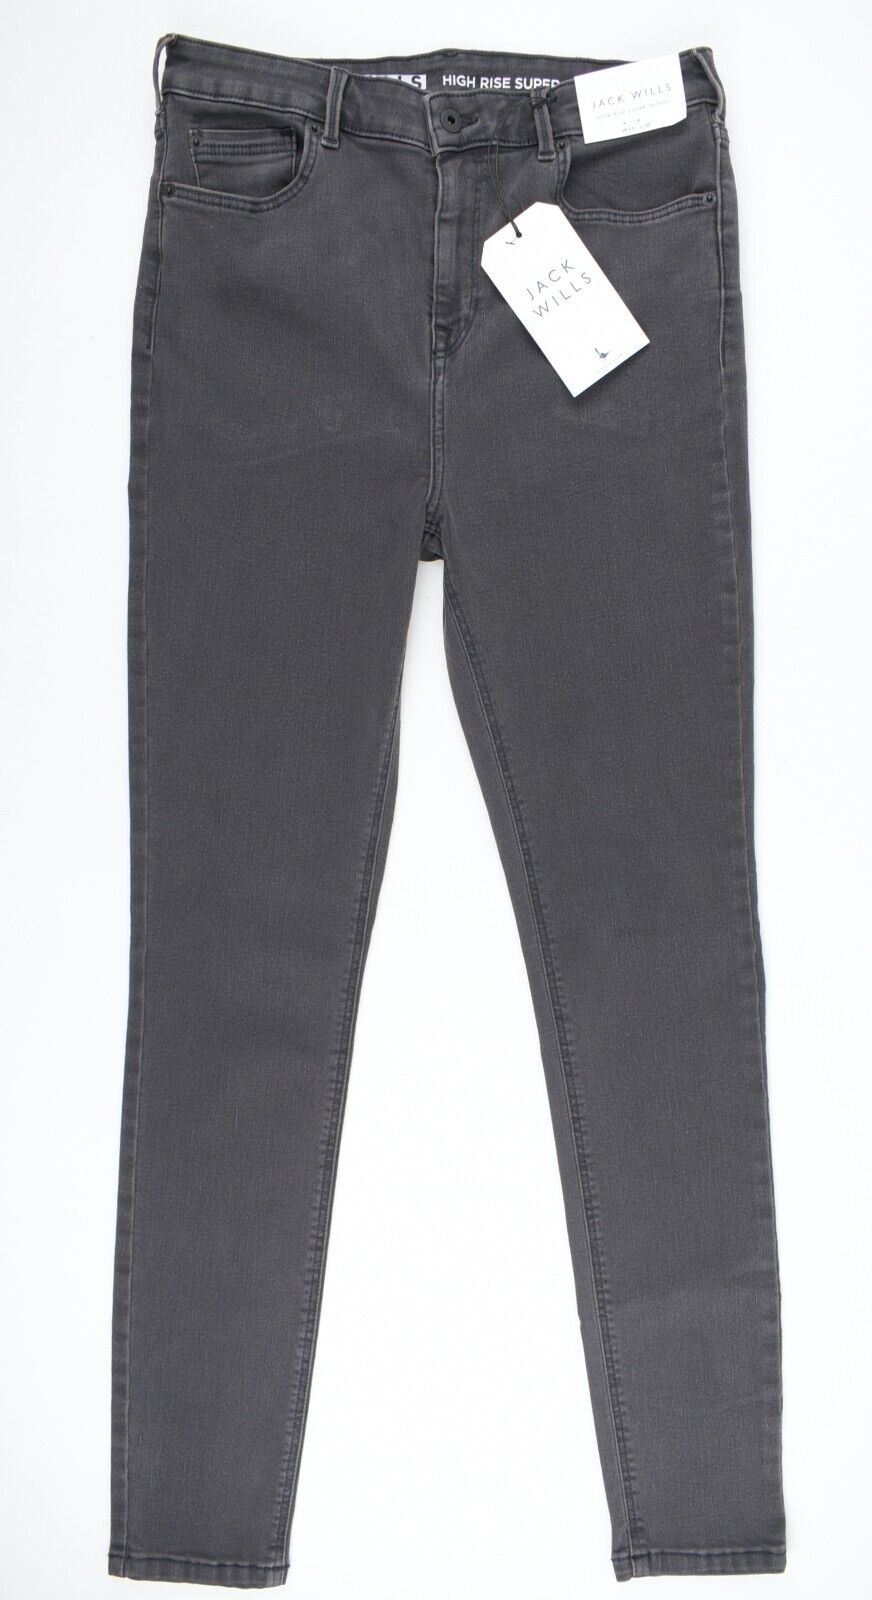 JACK WILLS Women's JAGGER High Rise Super Skinny Jeans, Black, size W30 L30